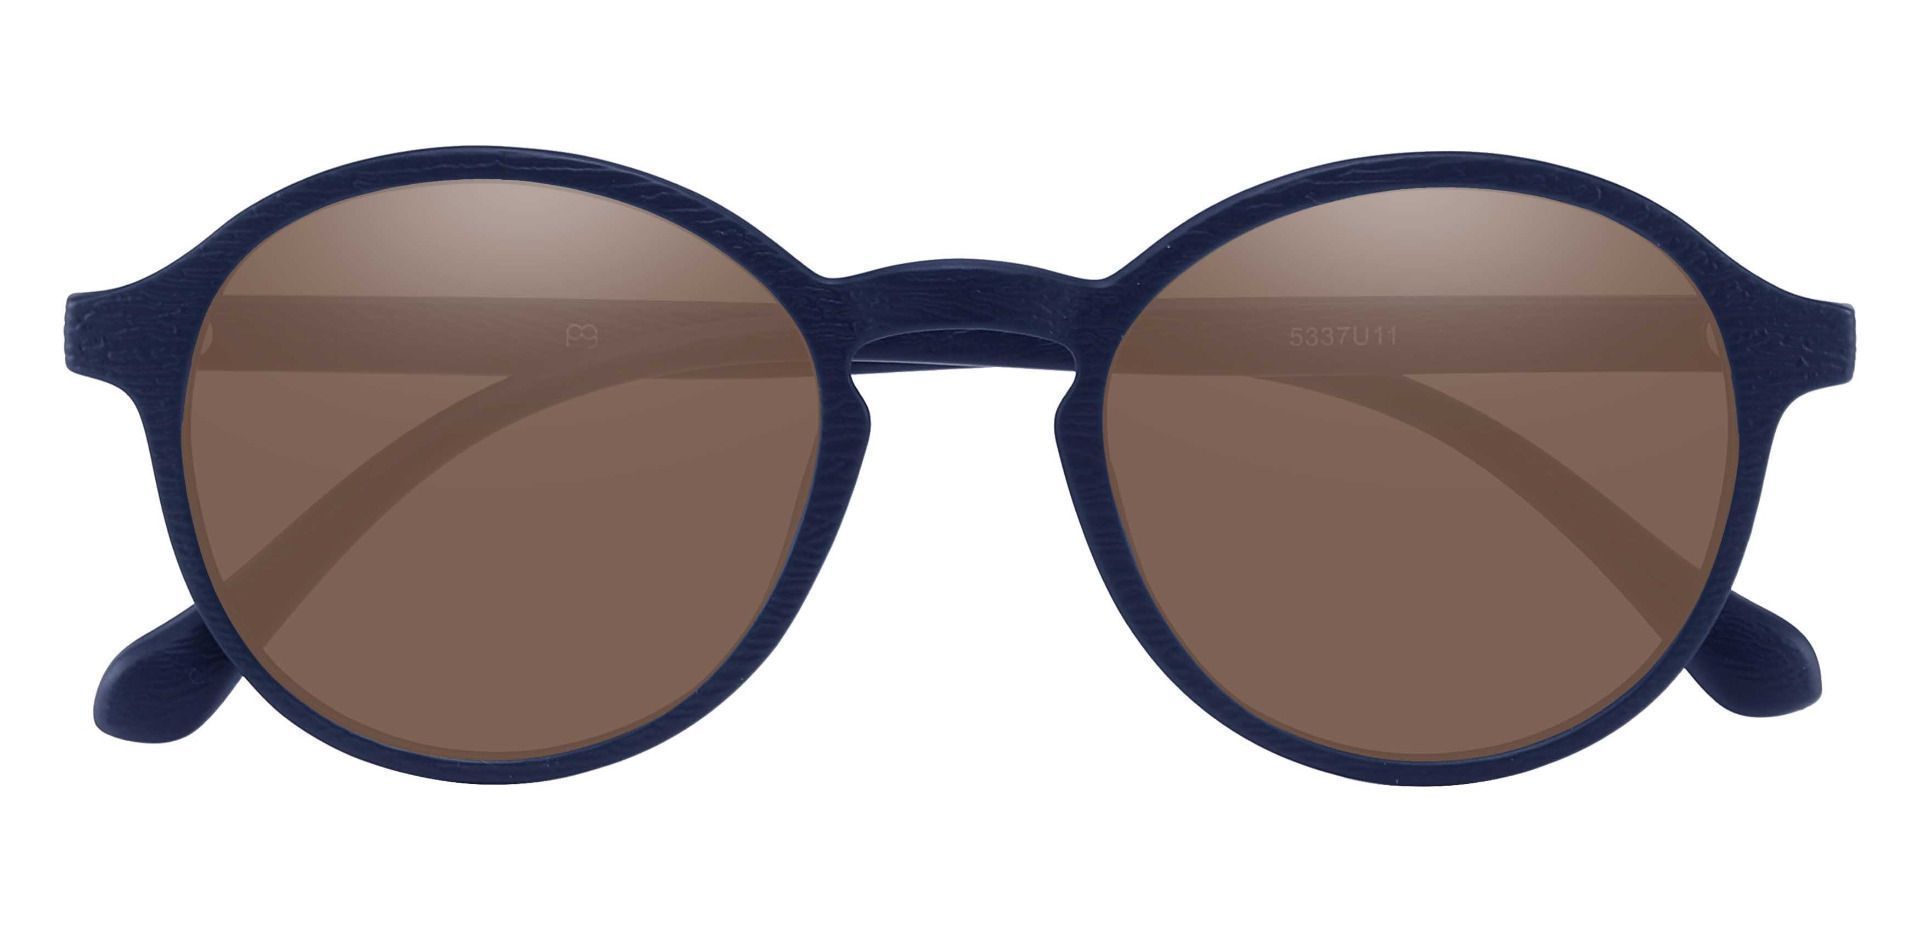 Whitney Round Prescription Sunglasses - Blue Frame With Brown Lenses